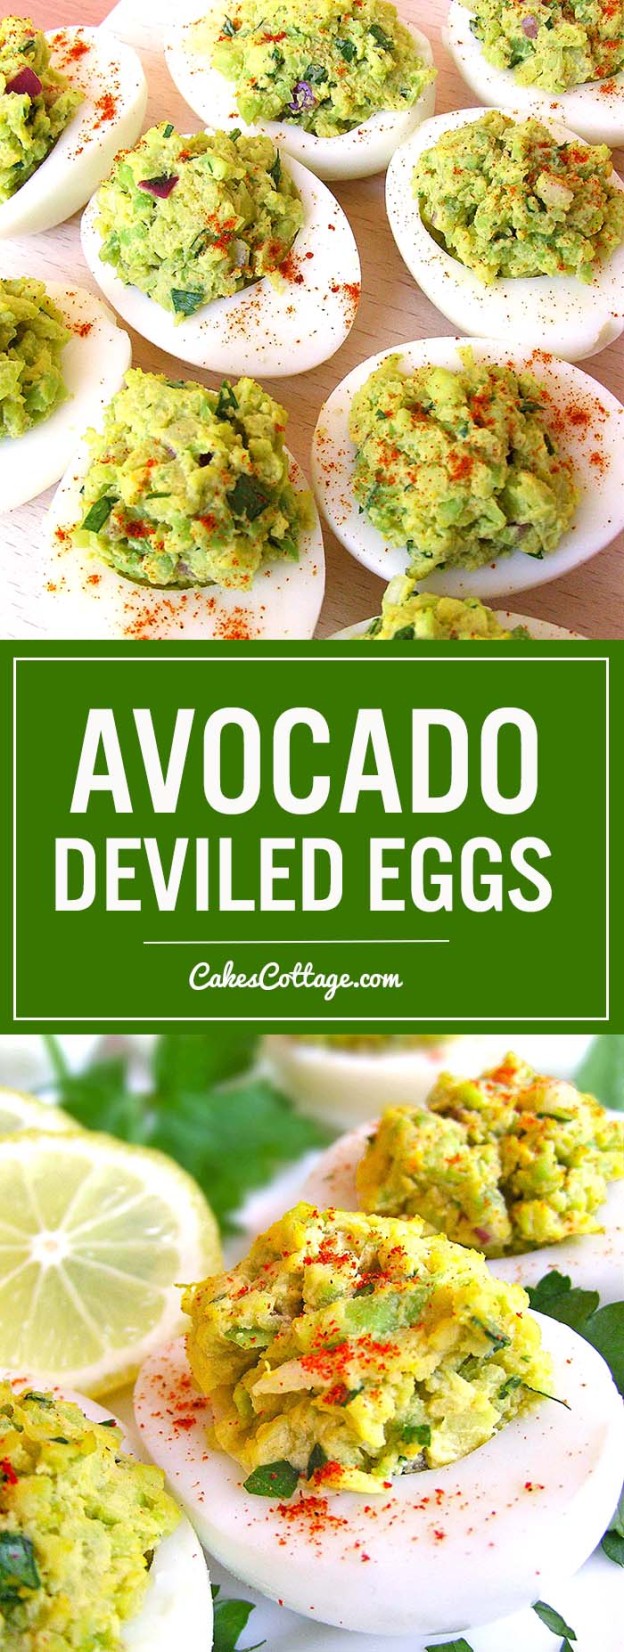 Avocado Deviled Eggs - Cakescottage